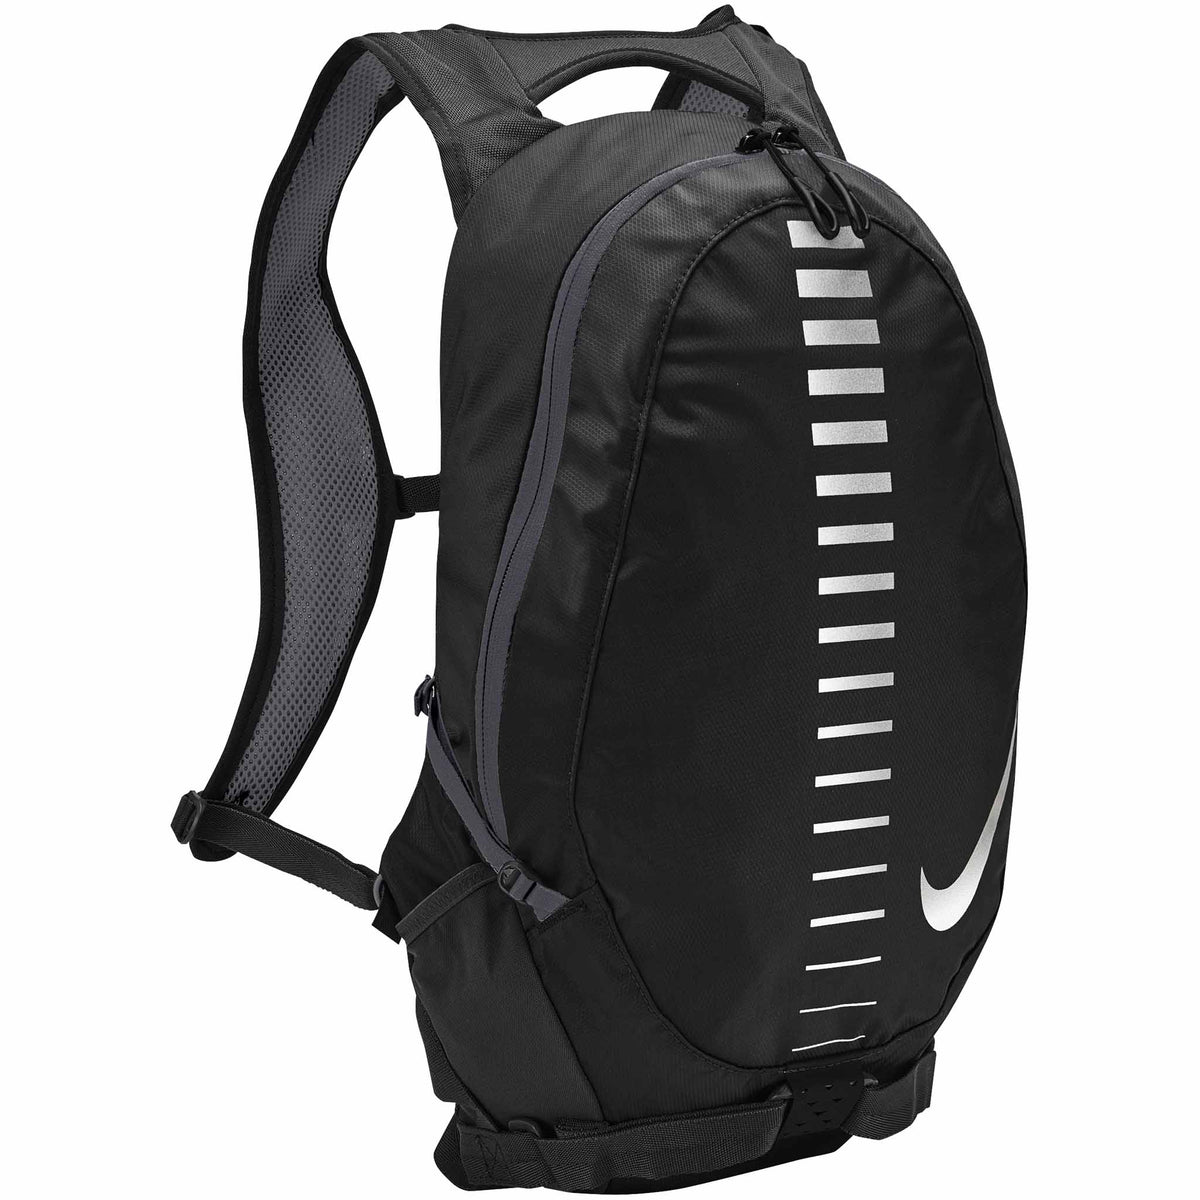 Nike Commuter 15 L sac à dos sport - Black / Anthracite / Silver